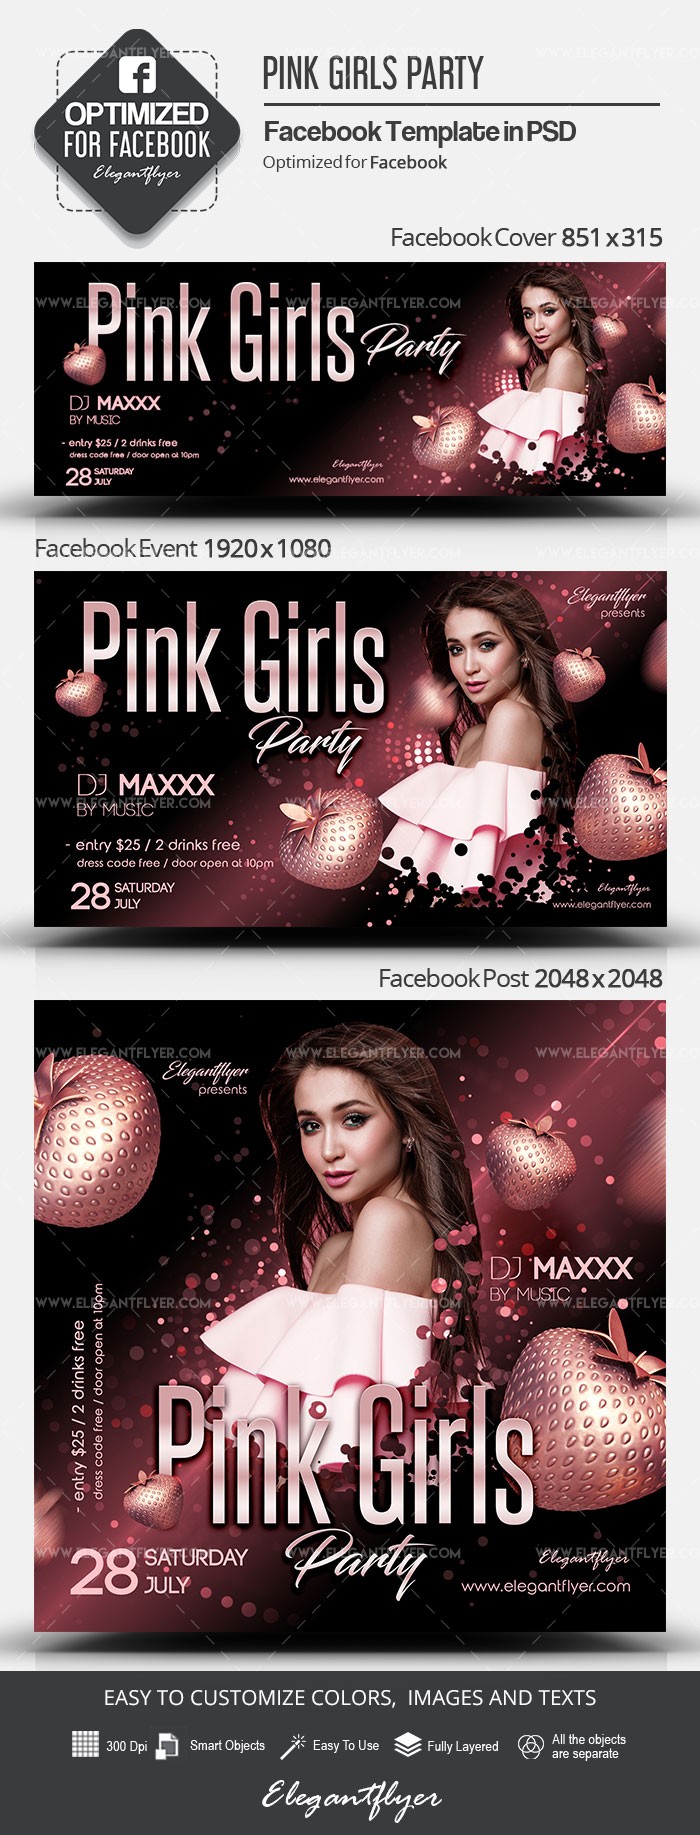 Pink Girls Party Facebook by ElegantFlyer